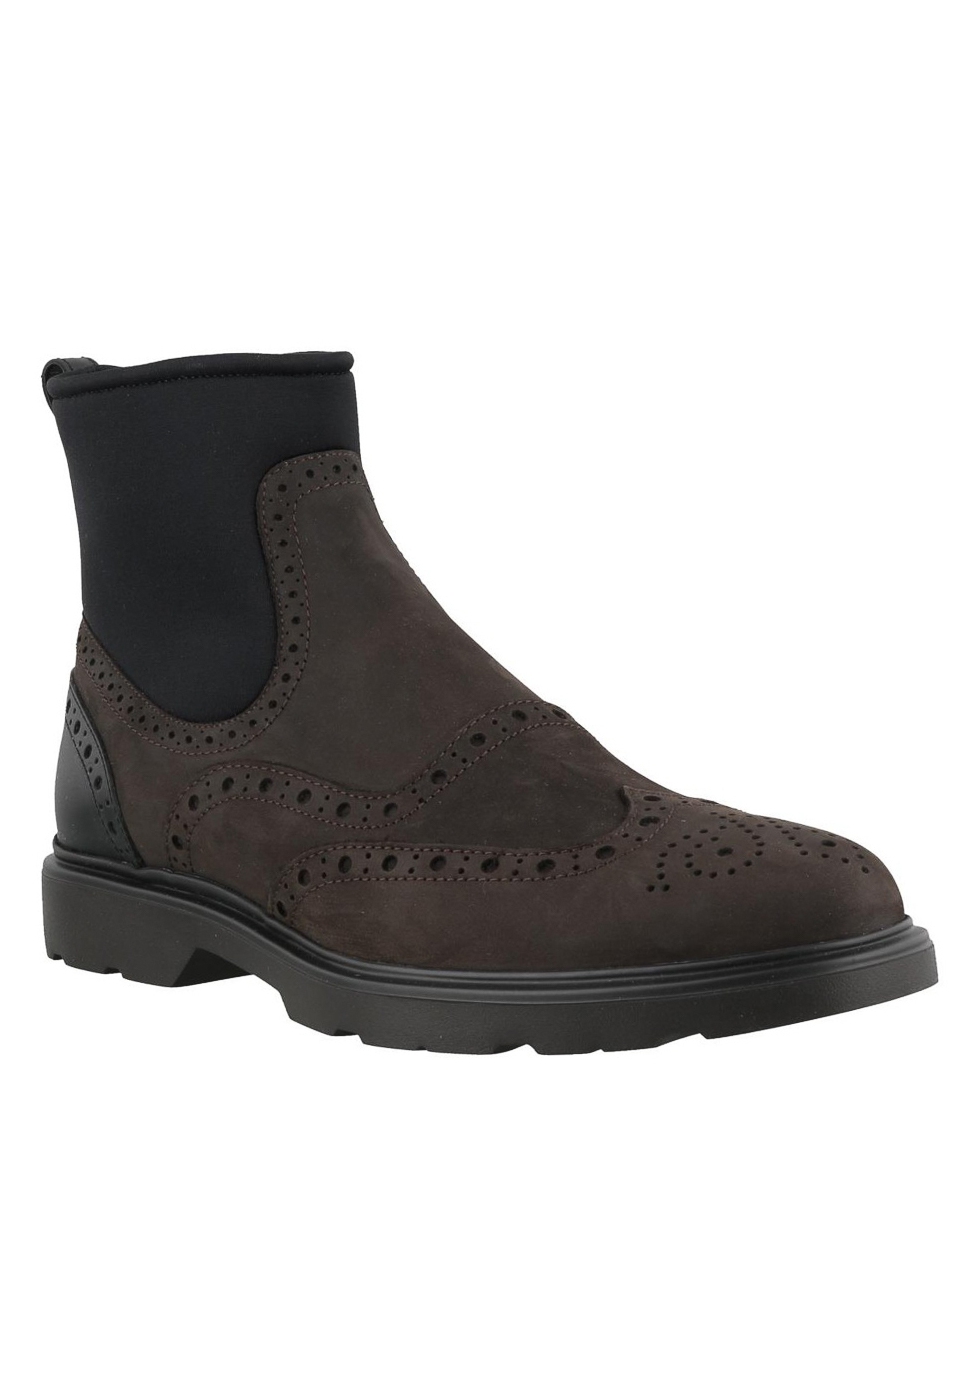 Hogan Men's fashion round toe laceless chukka boots in brown nubuck leather - Italian Boutique